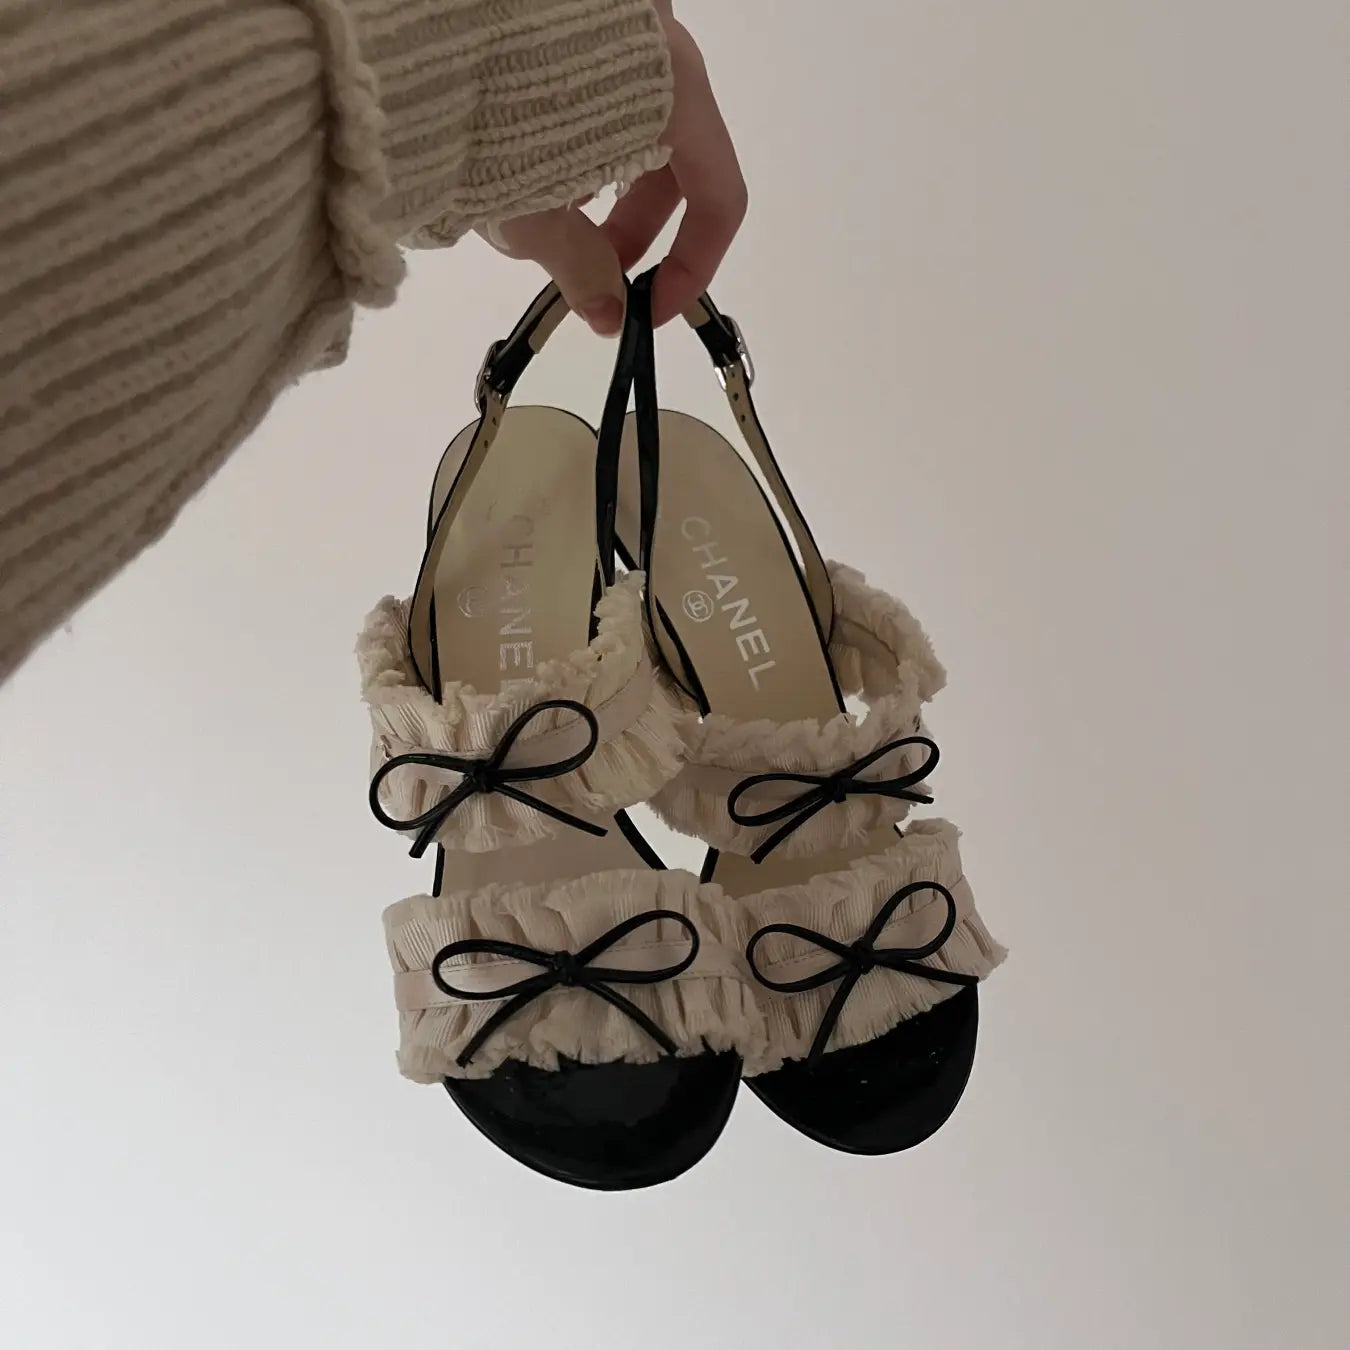 Chanel Interlocking CC Logo bow heels raffle shoes mirror palais ballet dress ruffle dress | Archive Square l bow vintage mules